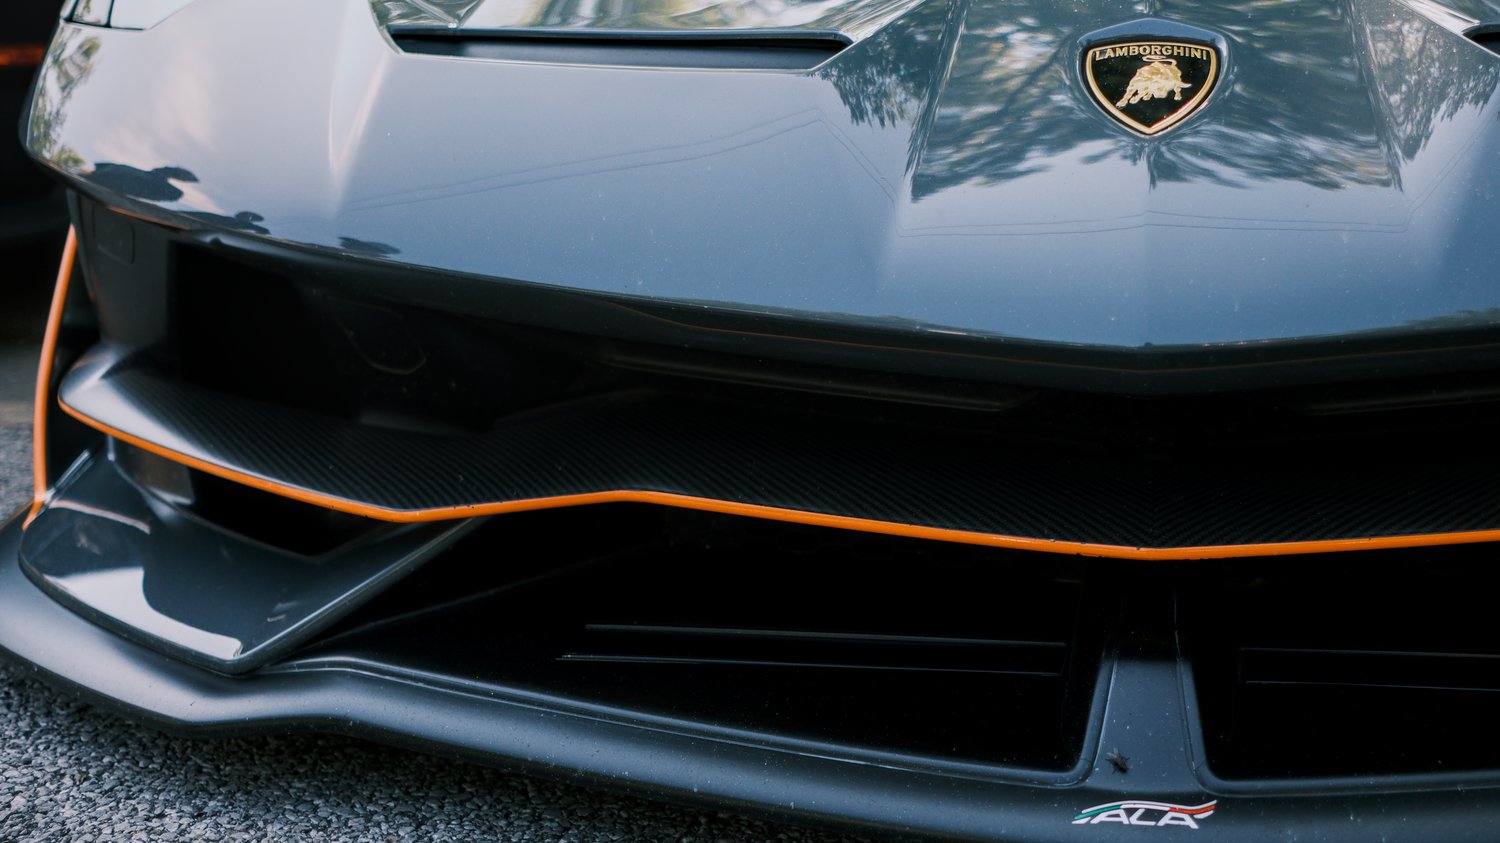 Front of Lamborghini.